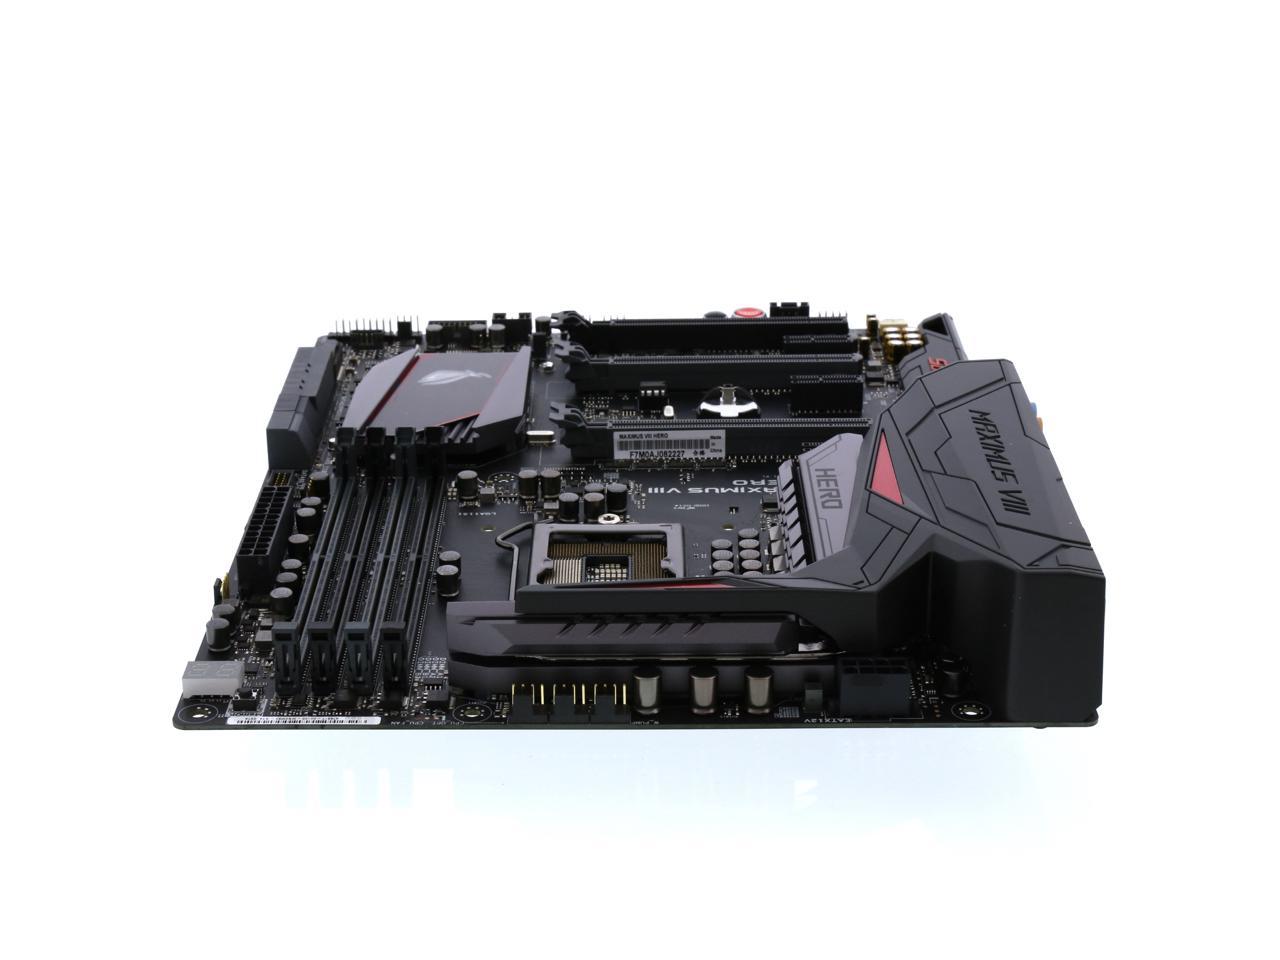 ASUS ROG MAXIMUS VIII HERO LGA 1151 Intel Z170 HDMI SATA 6Gb/s USB 3.1 ATX  Intel Gaming Motherboard